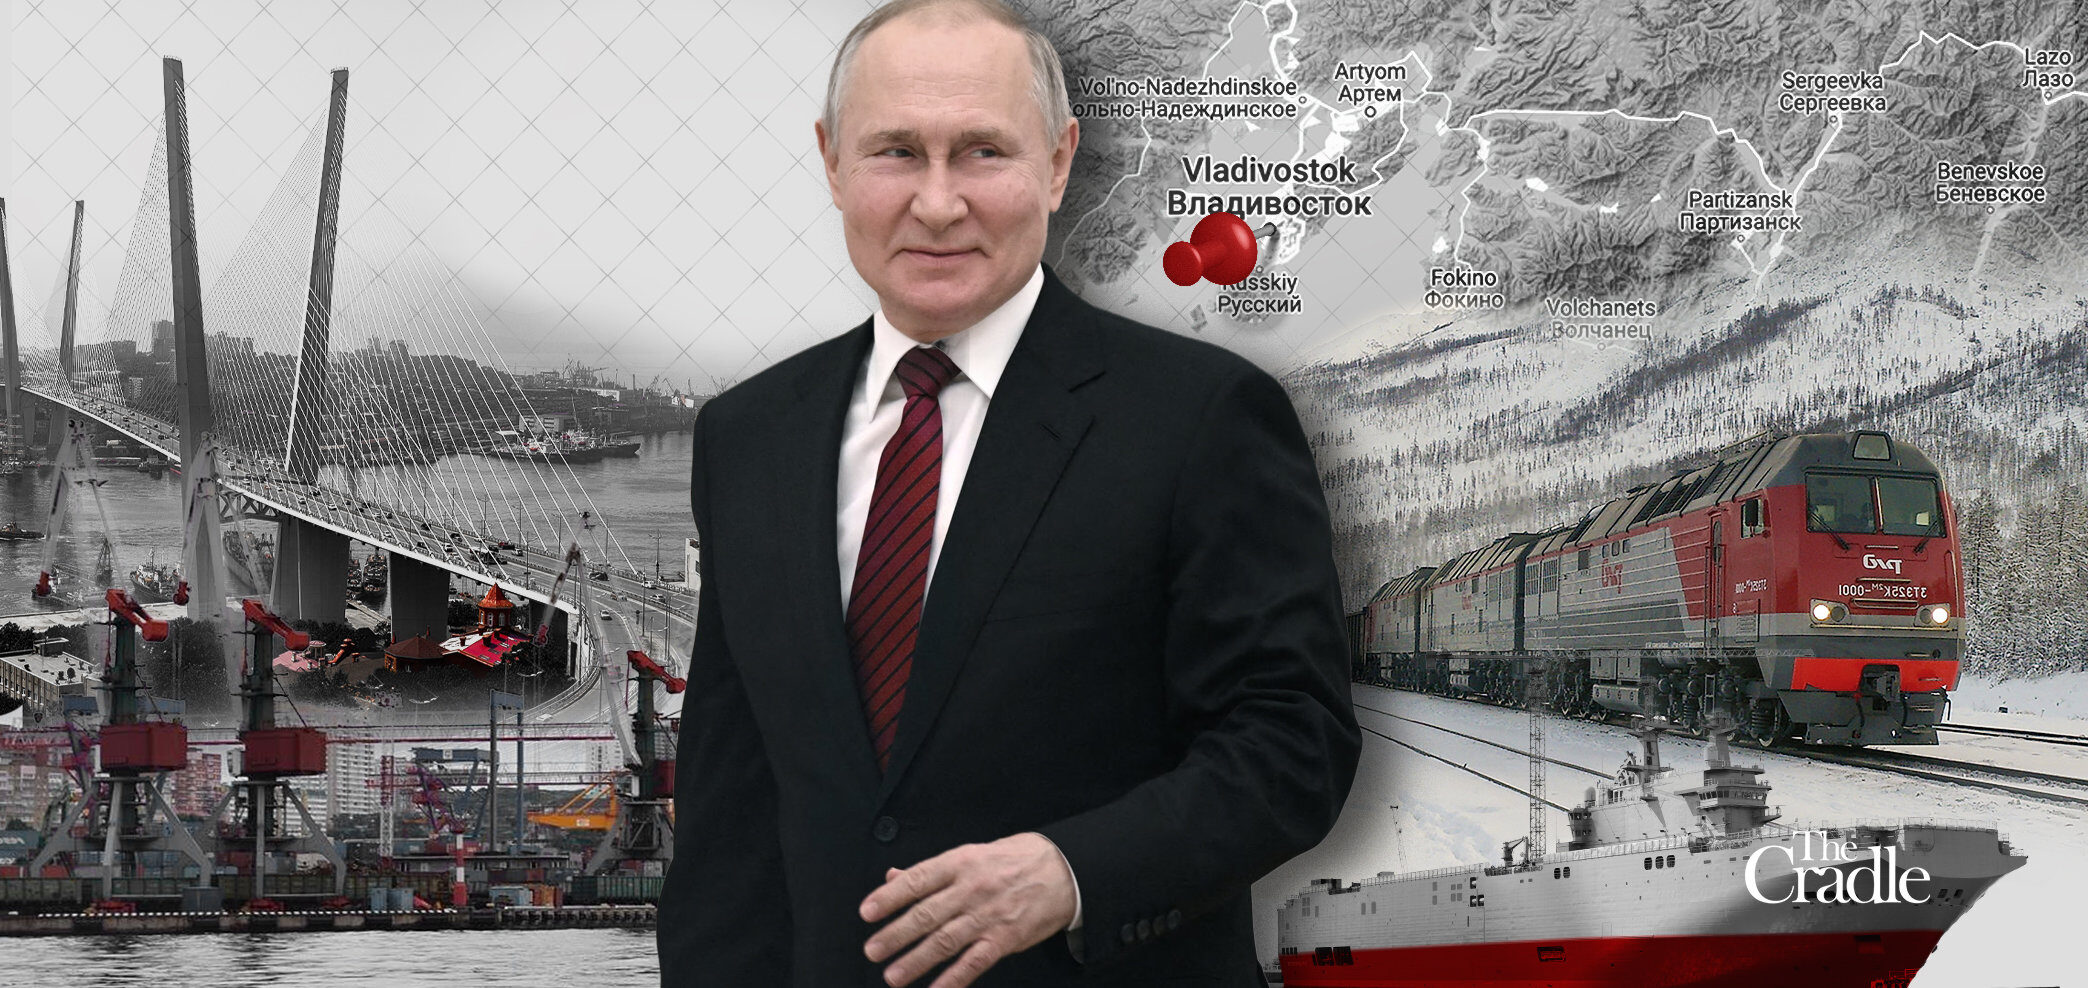 Putin in Vladivostok